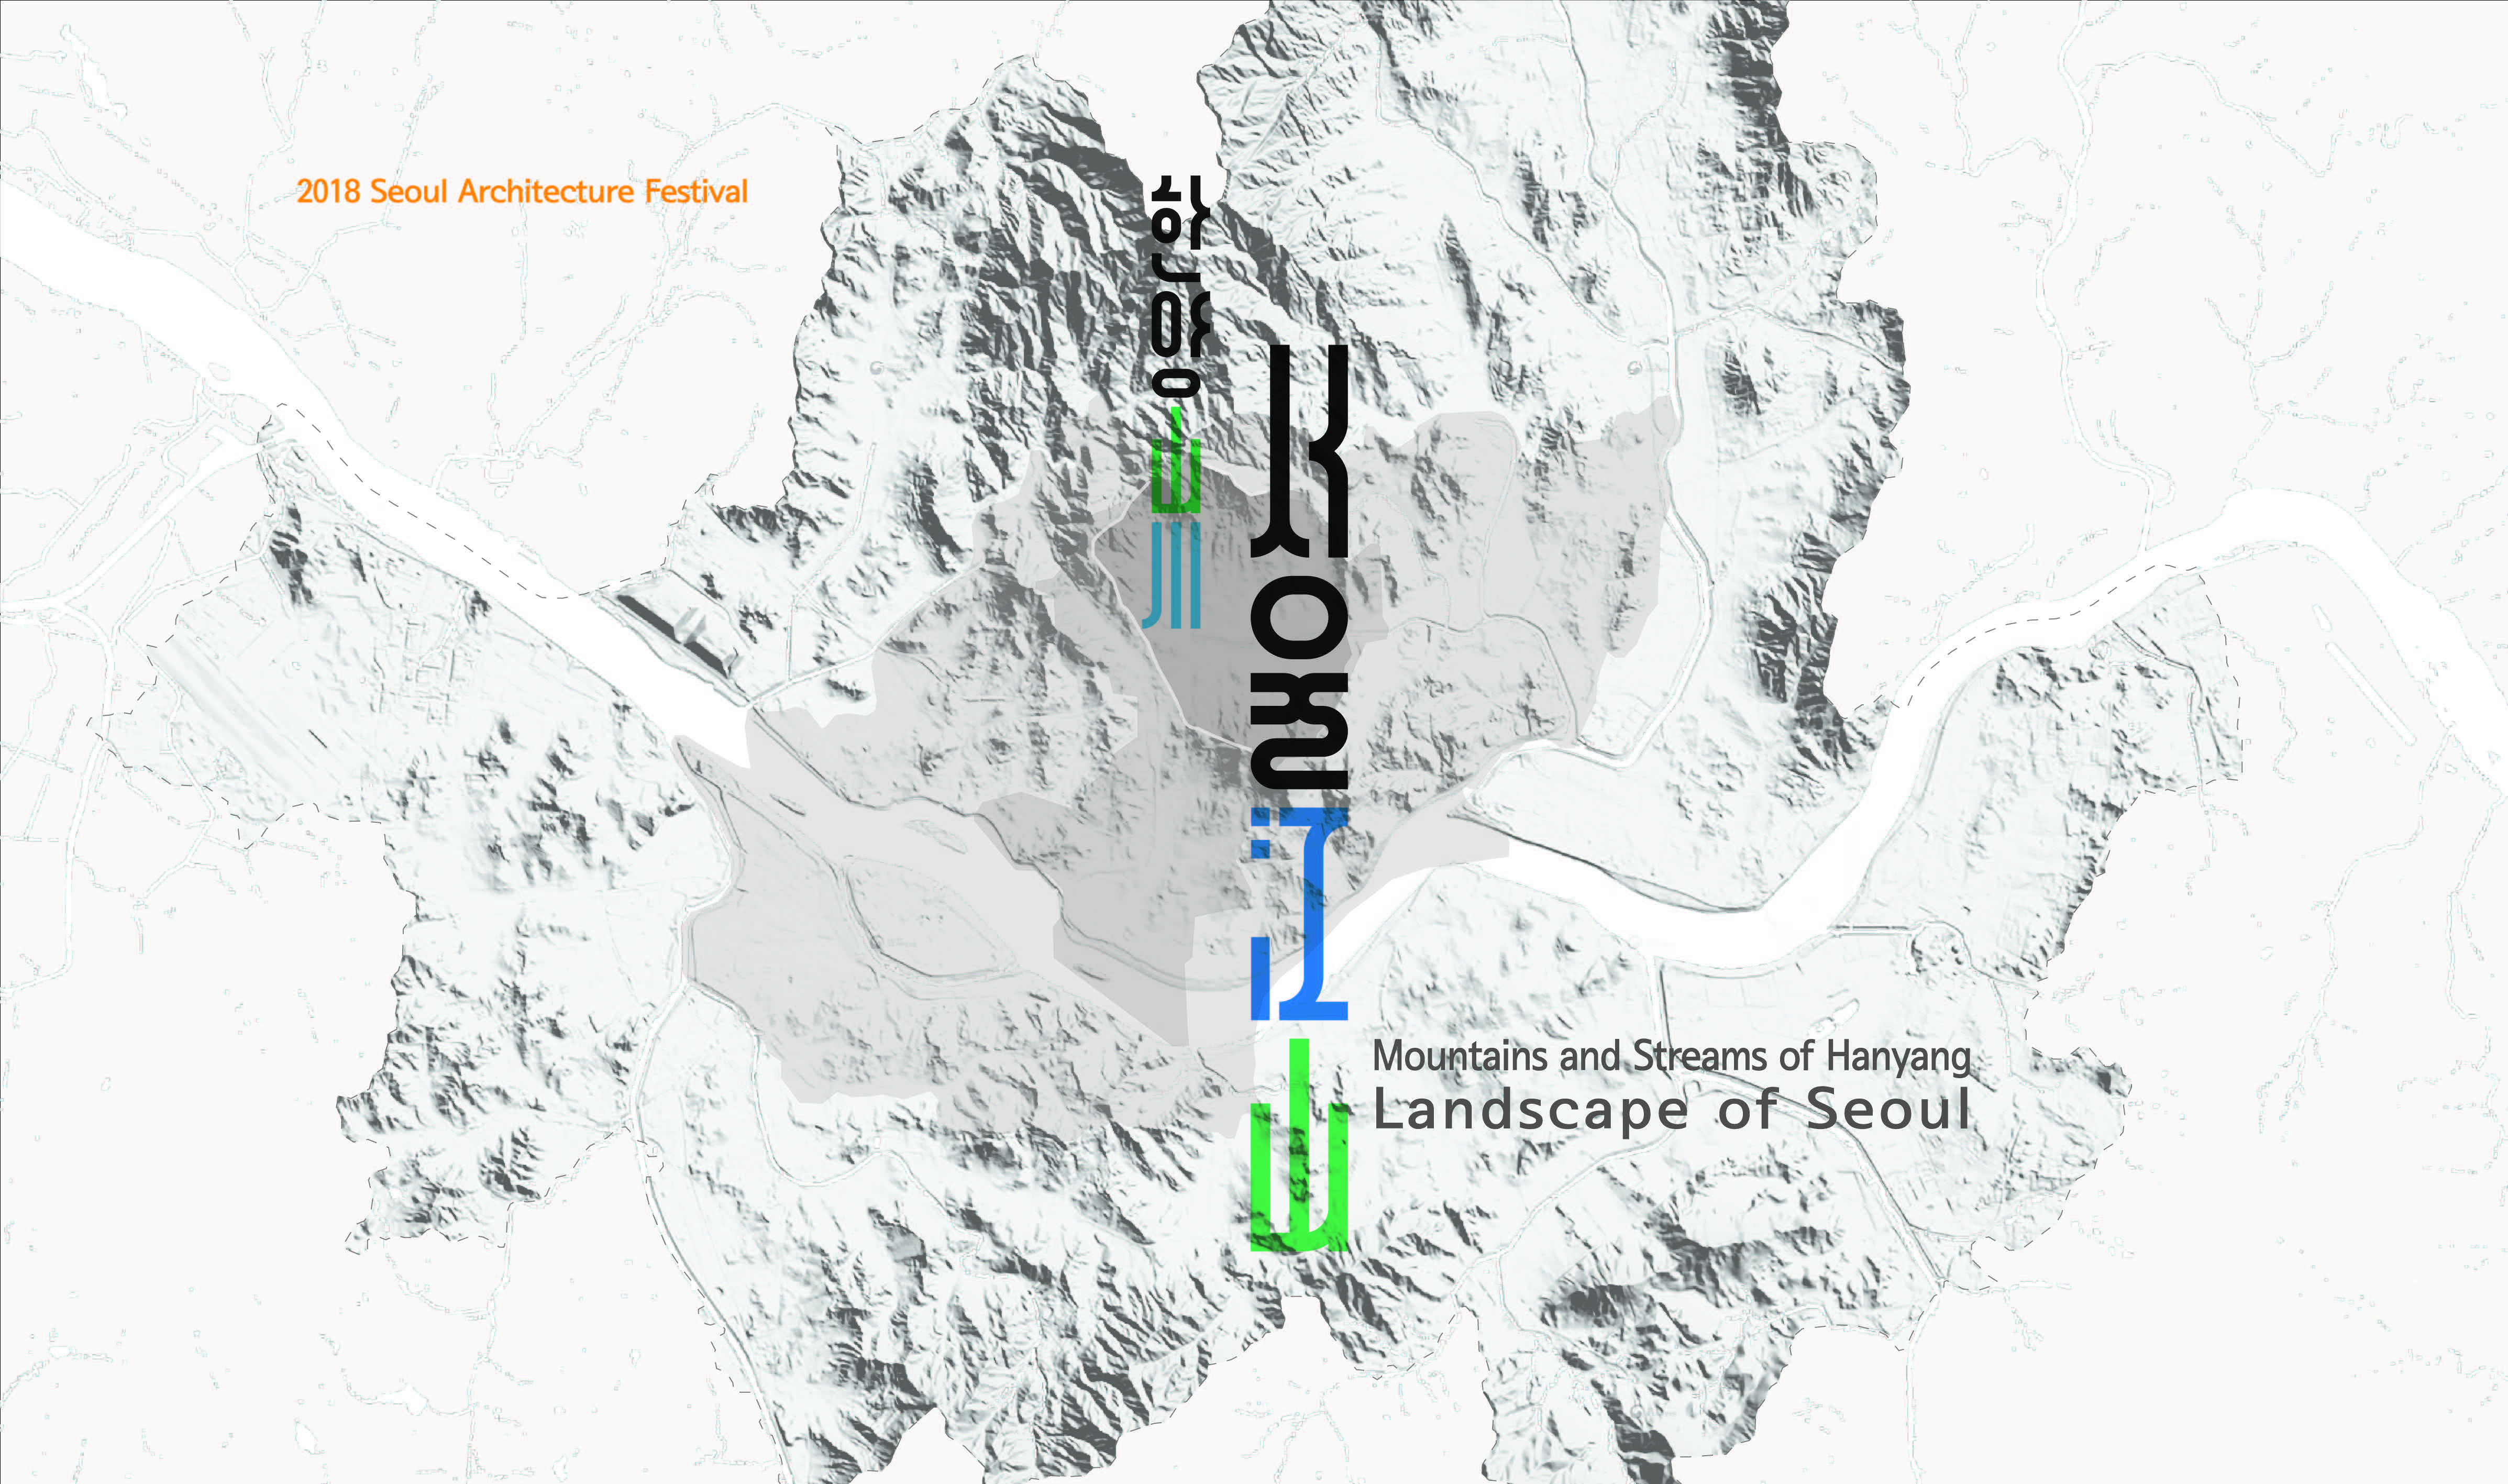 〔ANN의 뉴스 탐방〕 한양山川 서울江山’을 주제한 ‘서울건축문화제 2018’ 